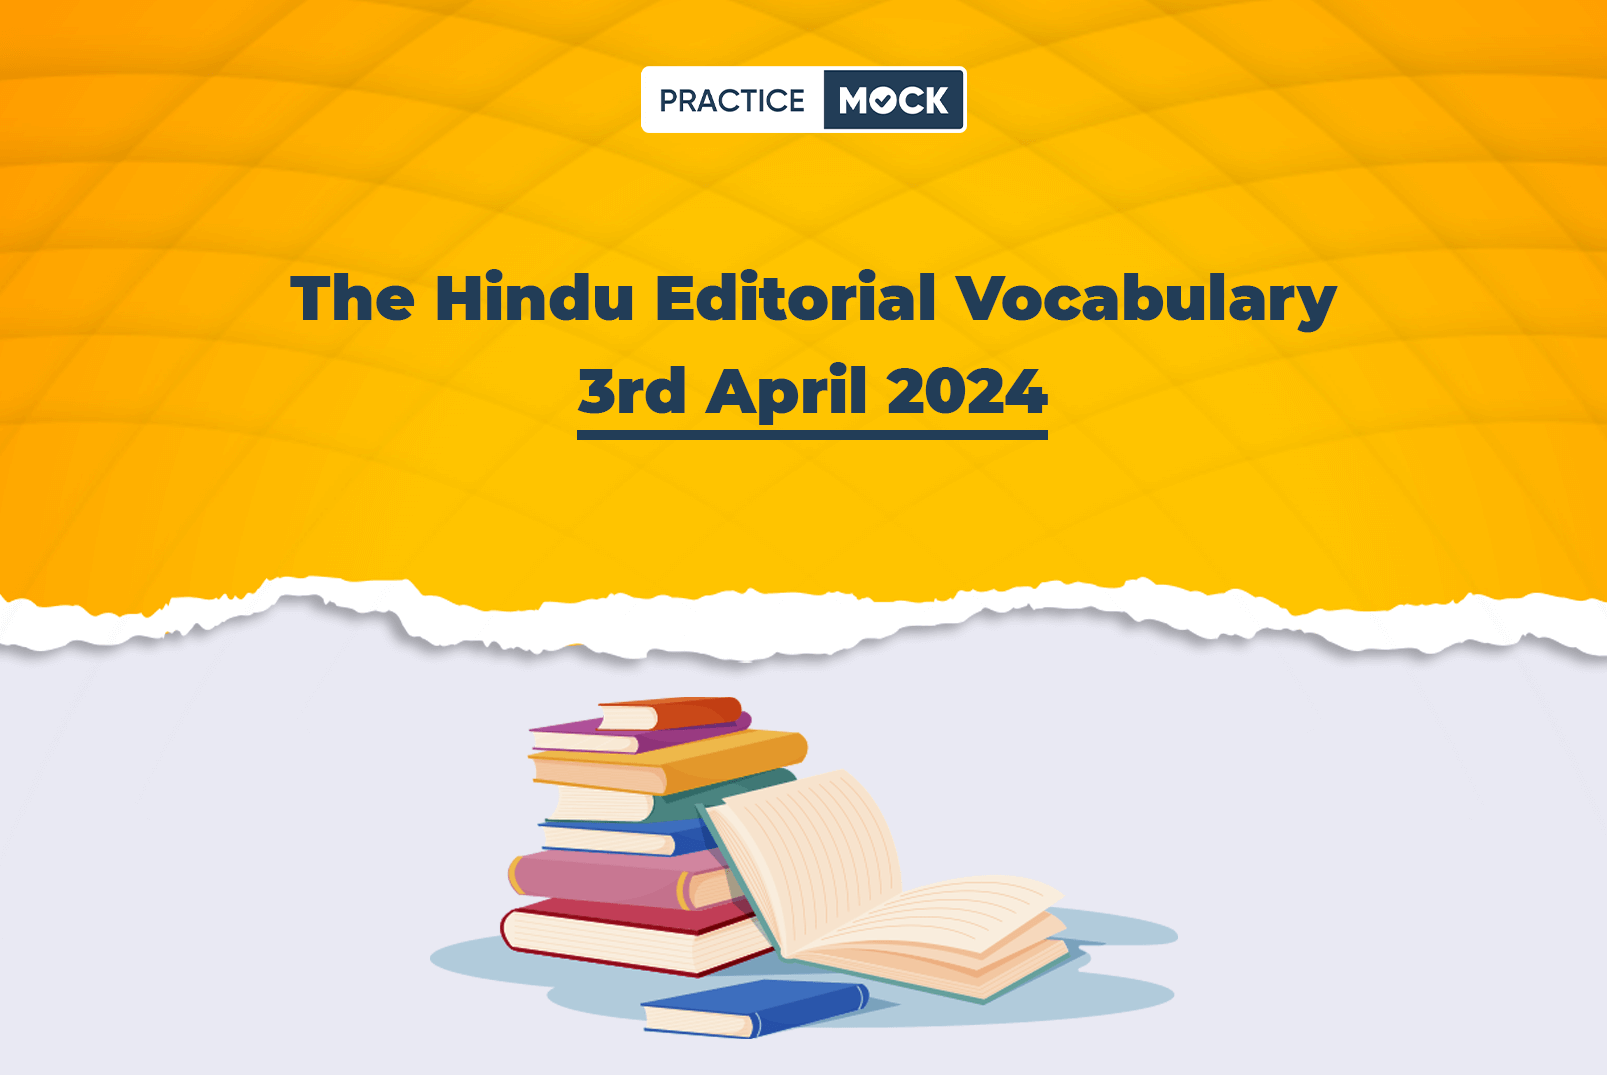 The Hindu Editorial Vocabulary 3rd April 2024